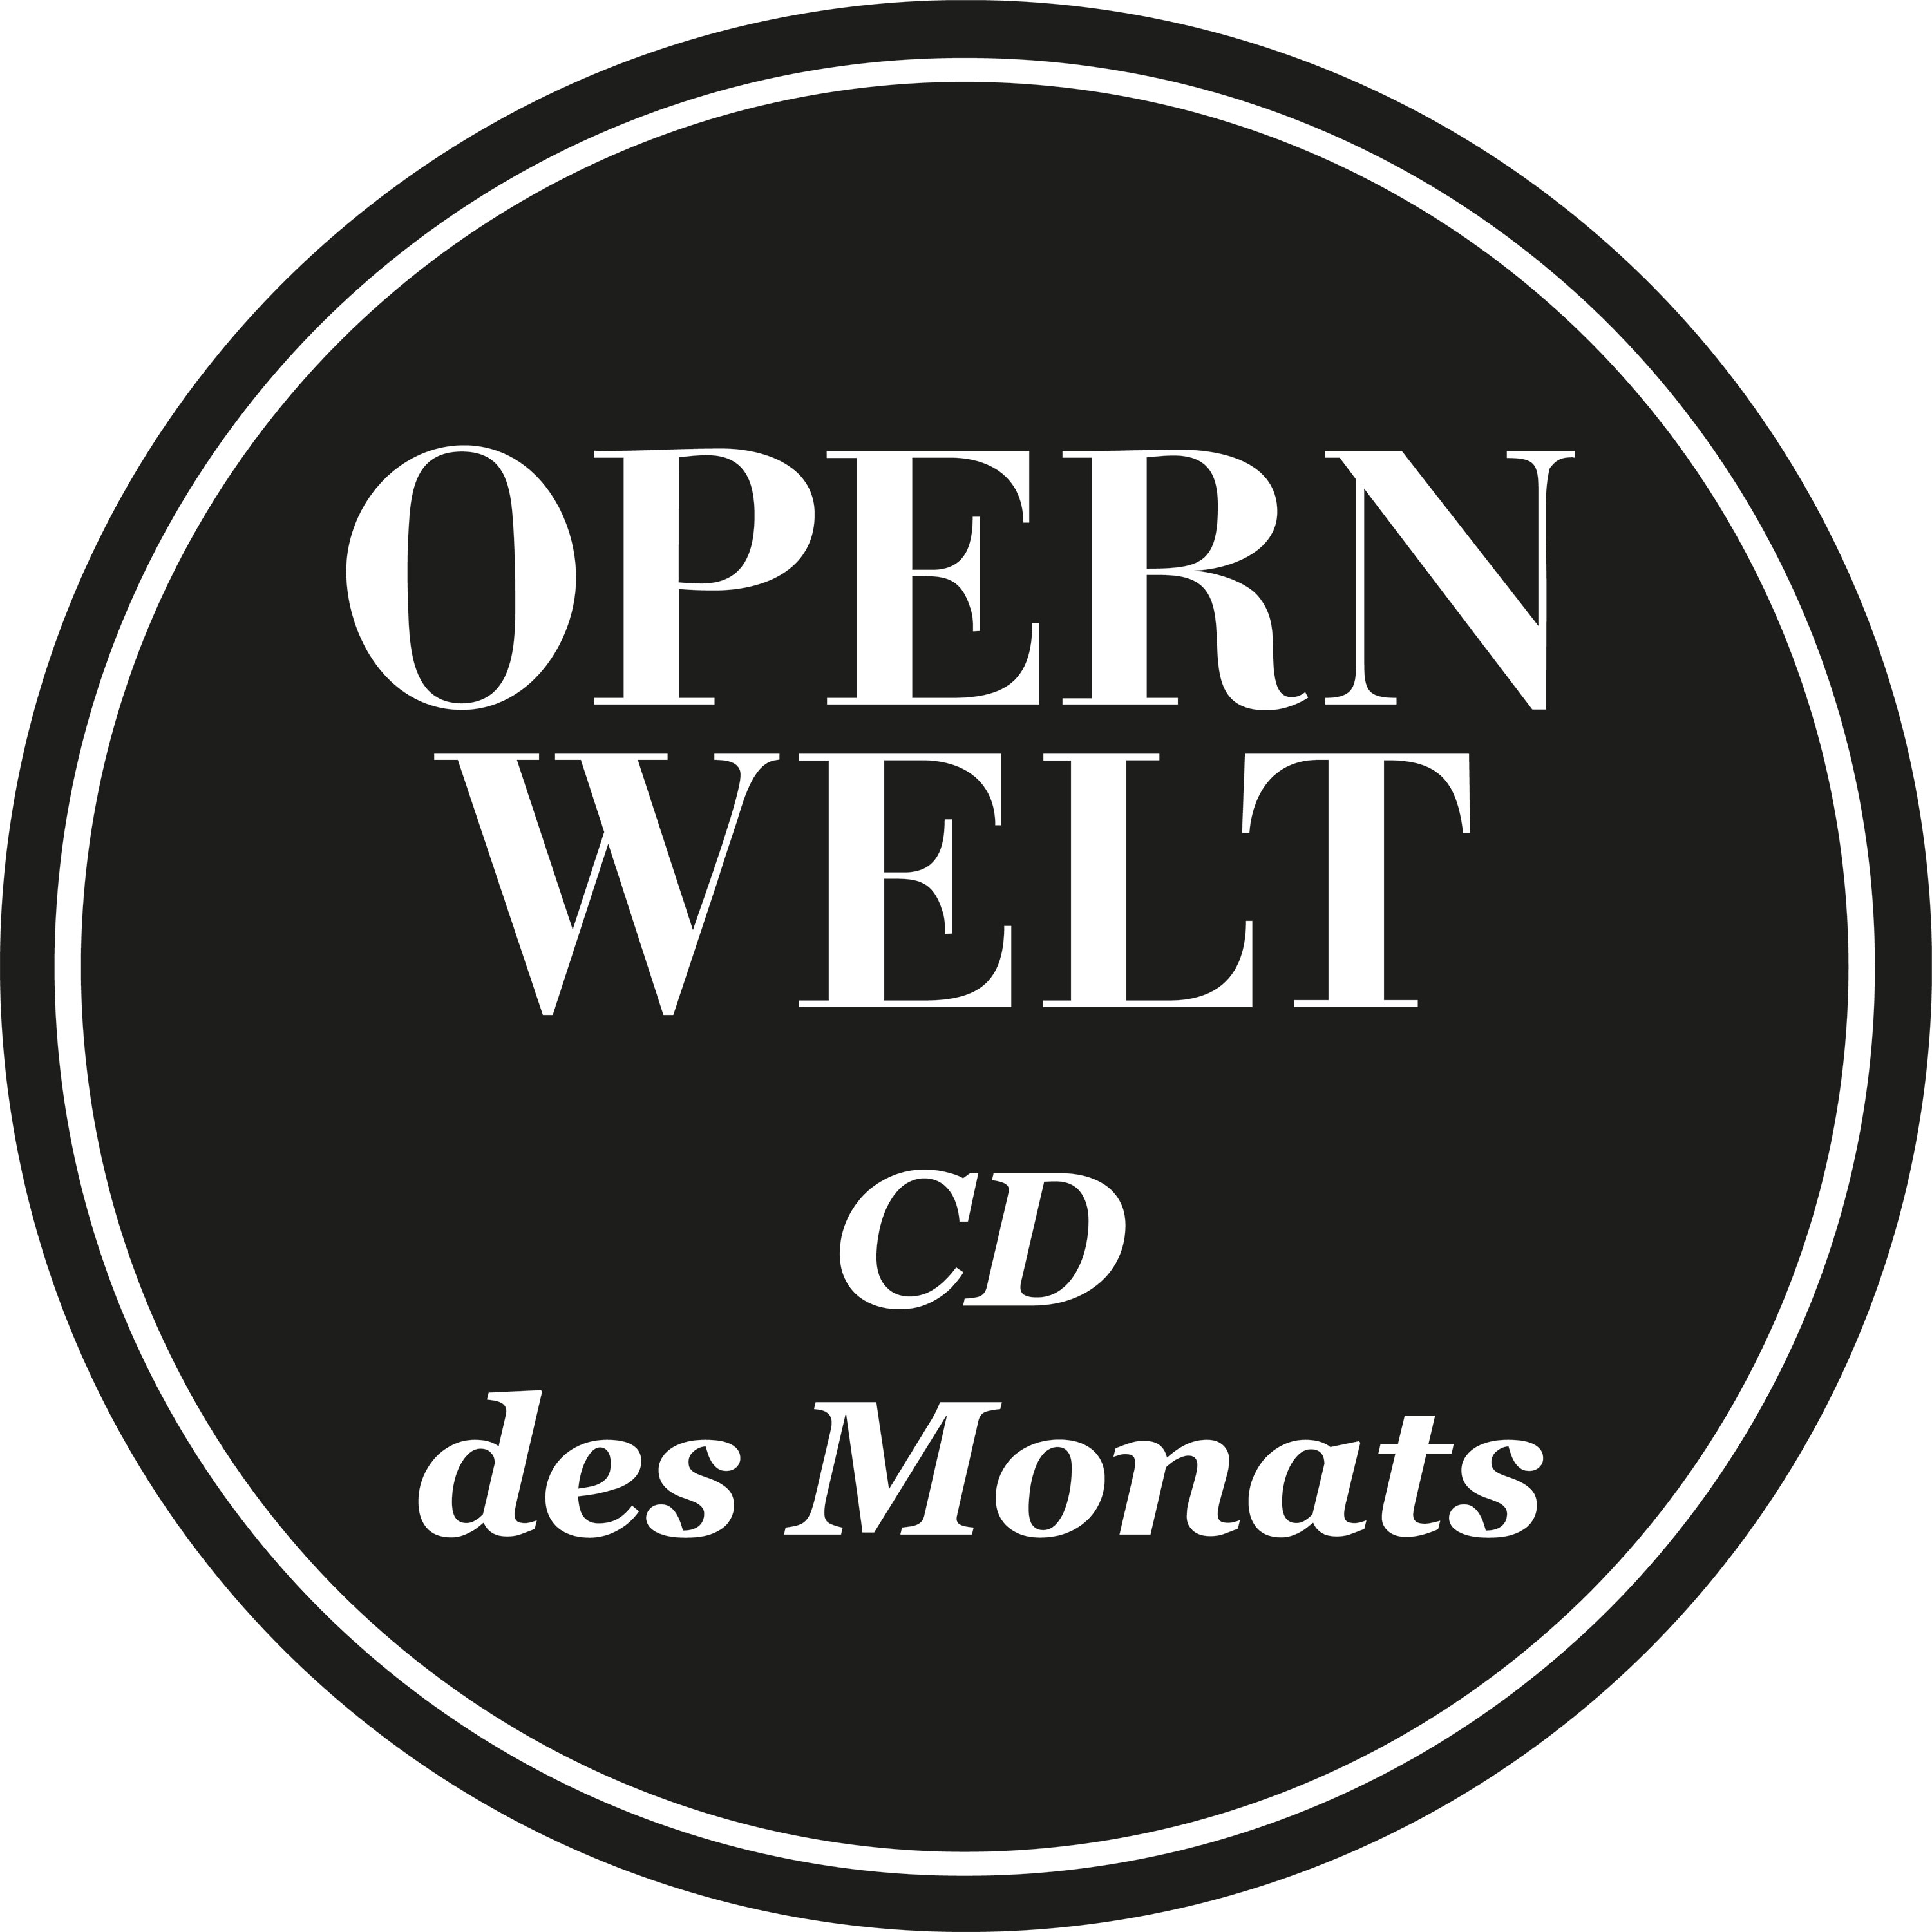 Operwelt: 'CD Des Monats' (January, 2021)